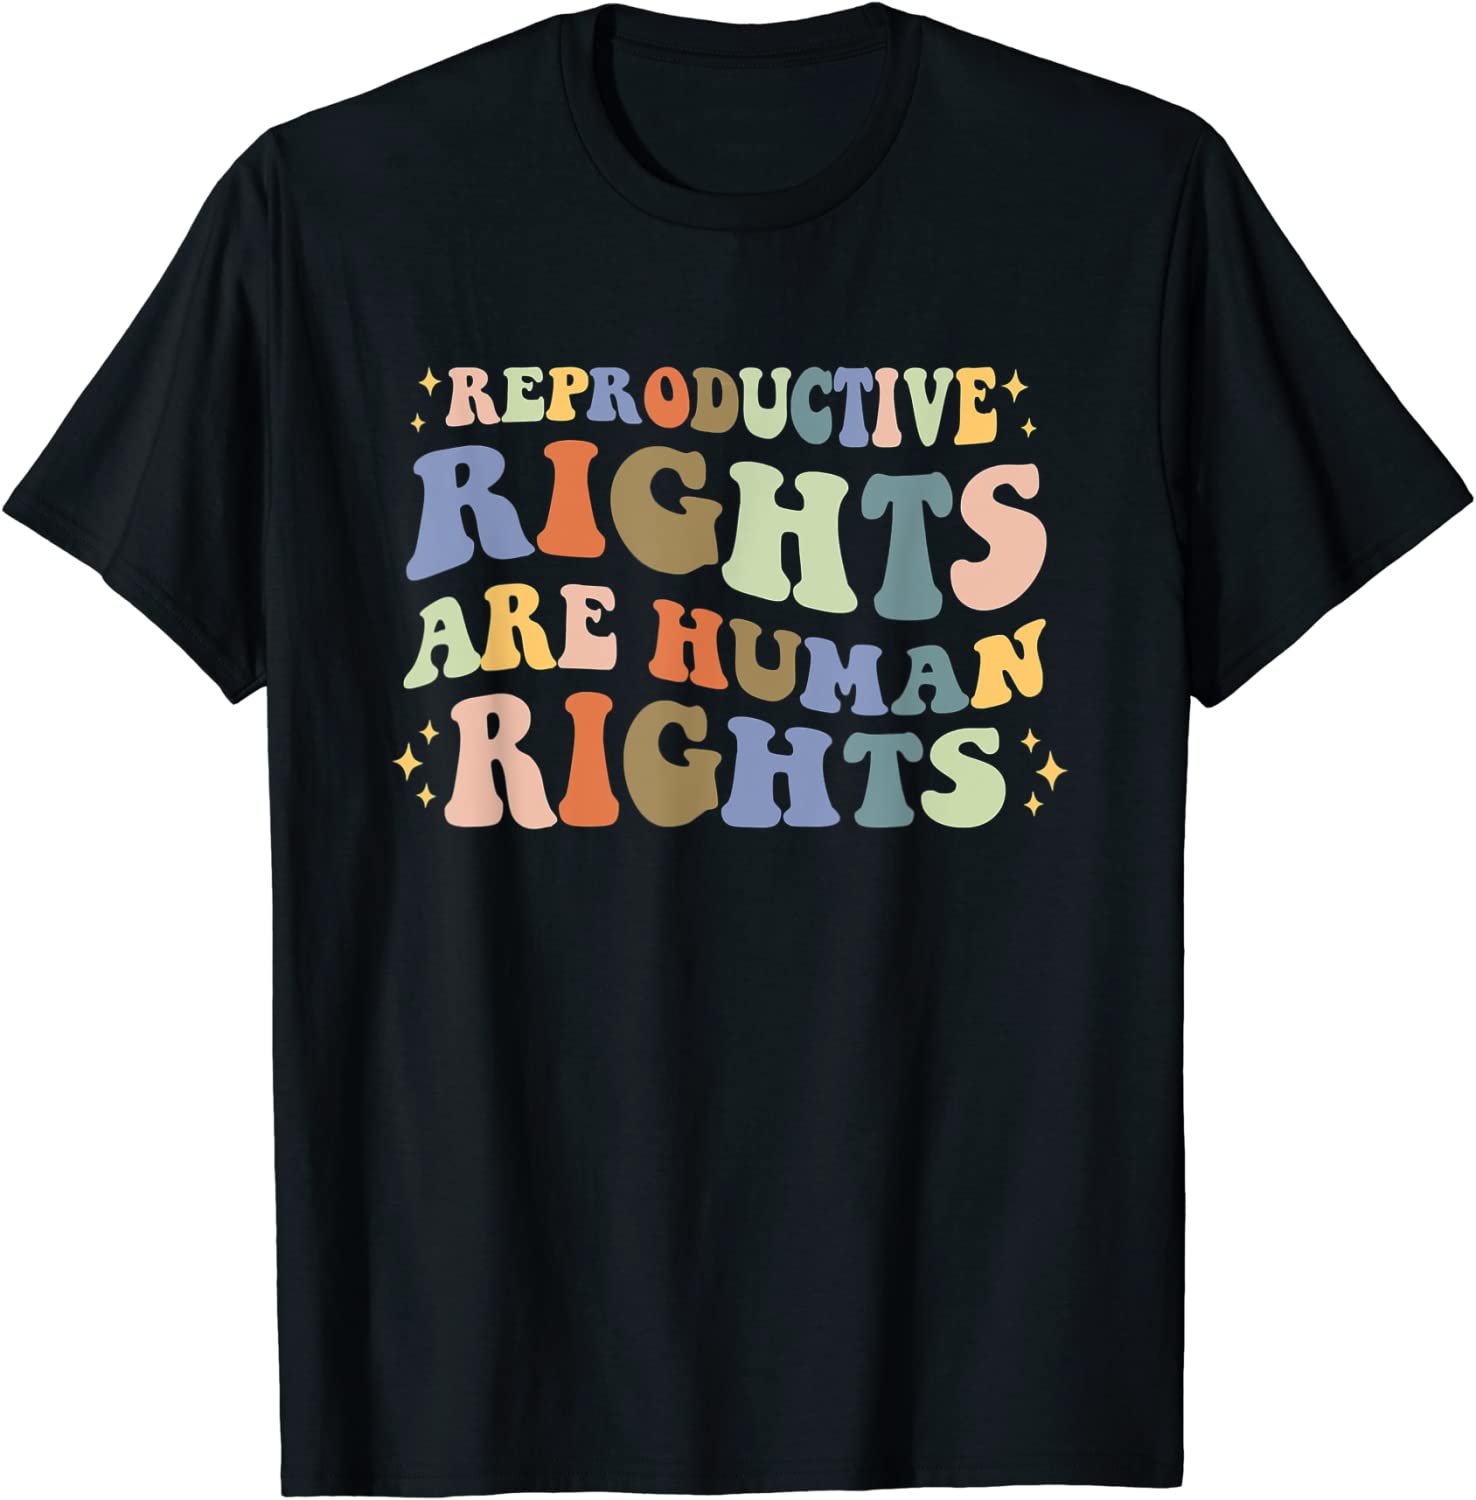 Reproductive rights are human rights shirt - Endastore.com